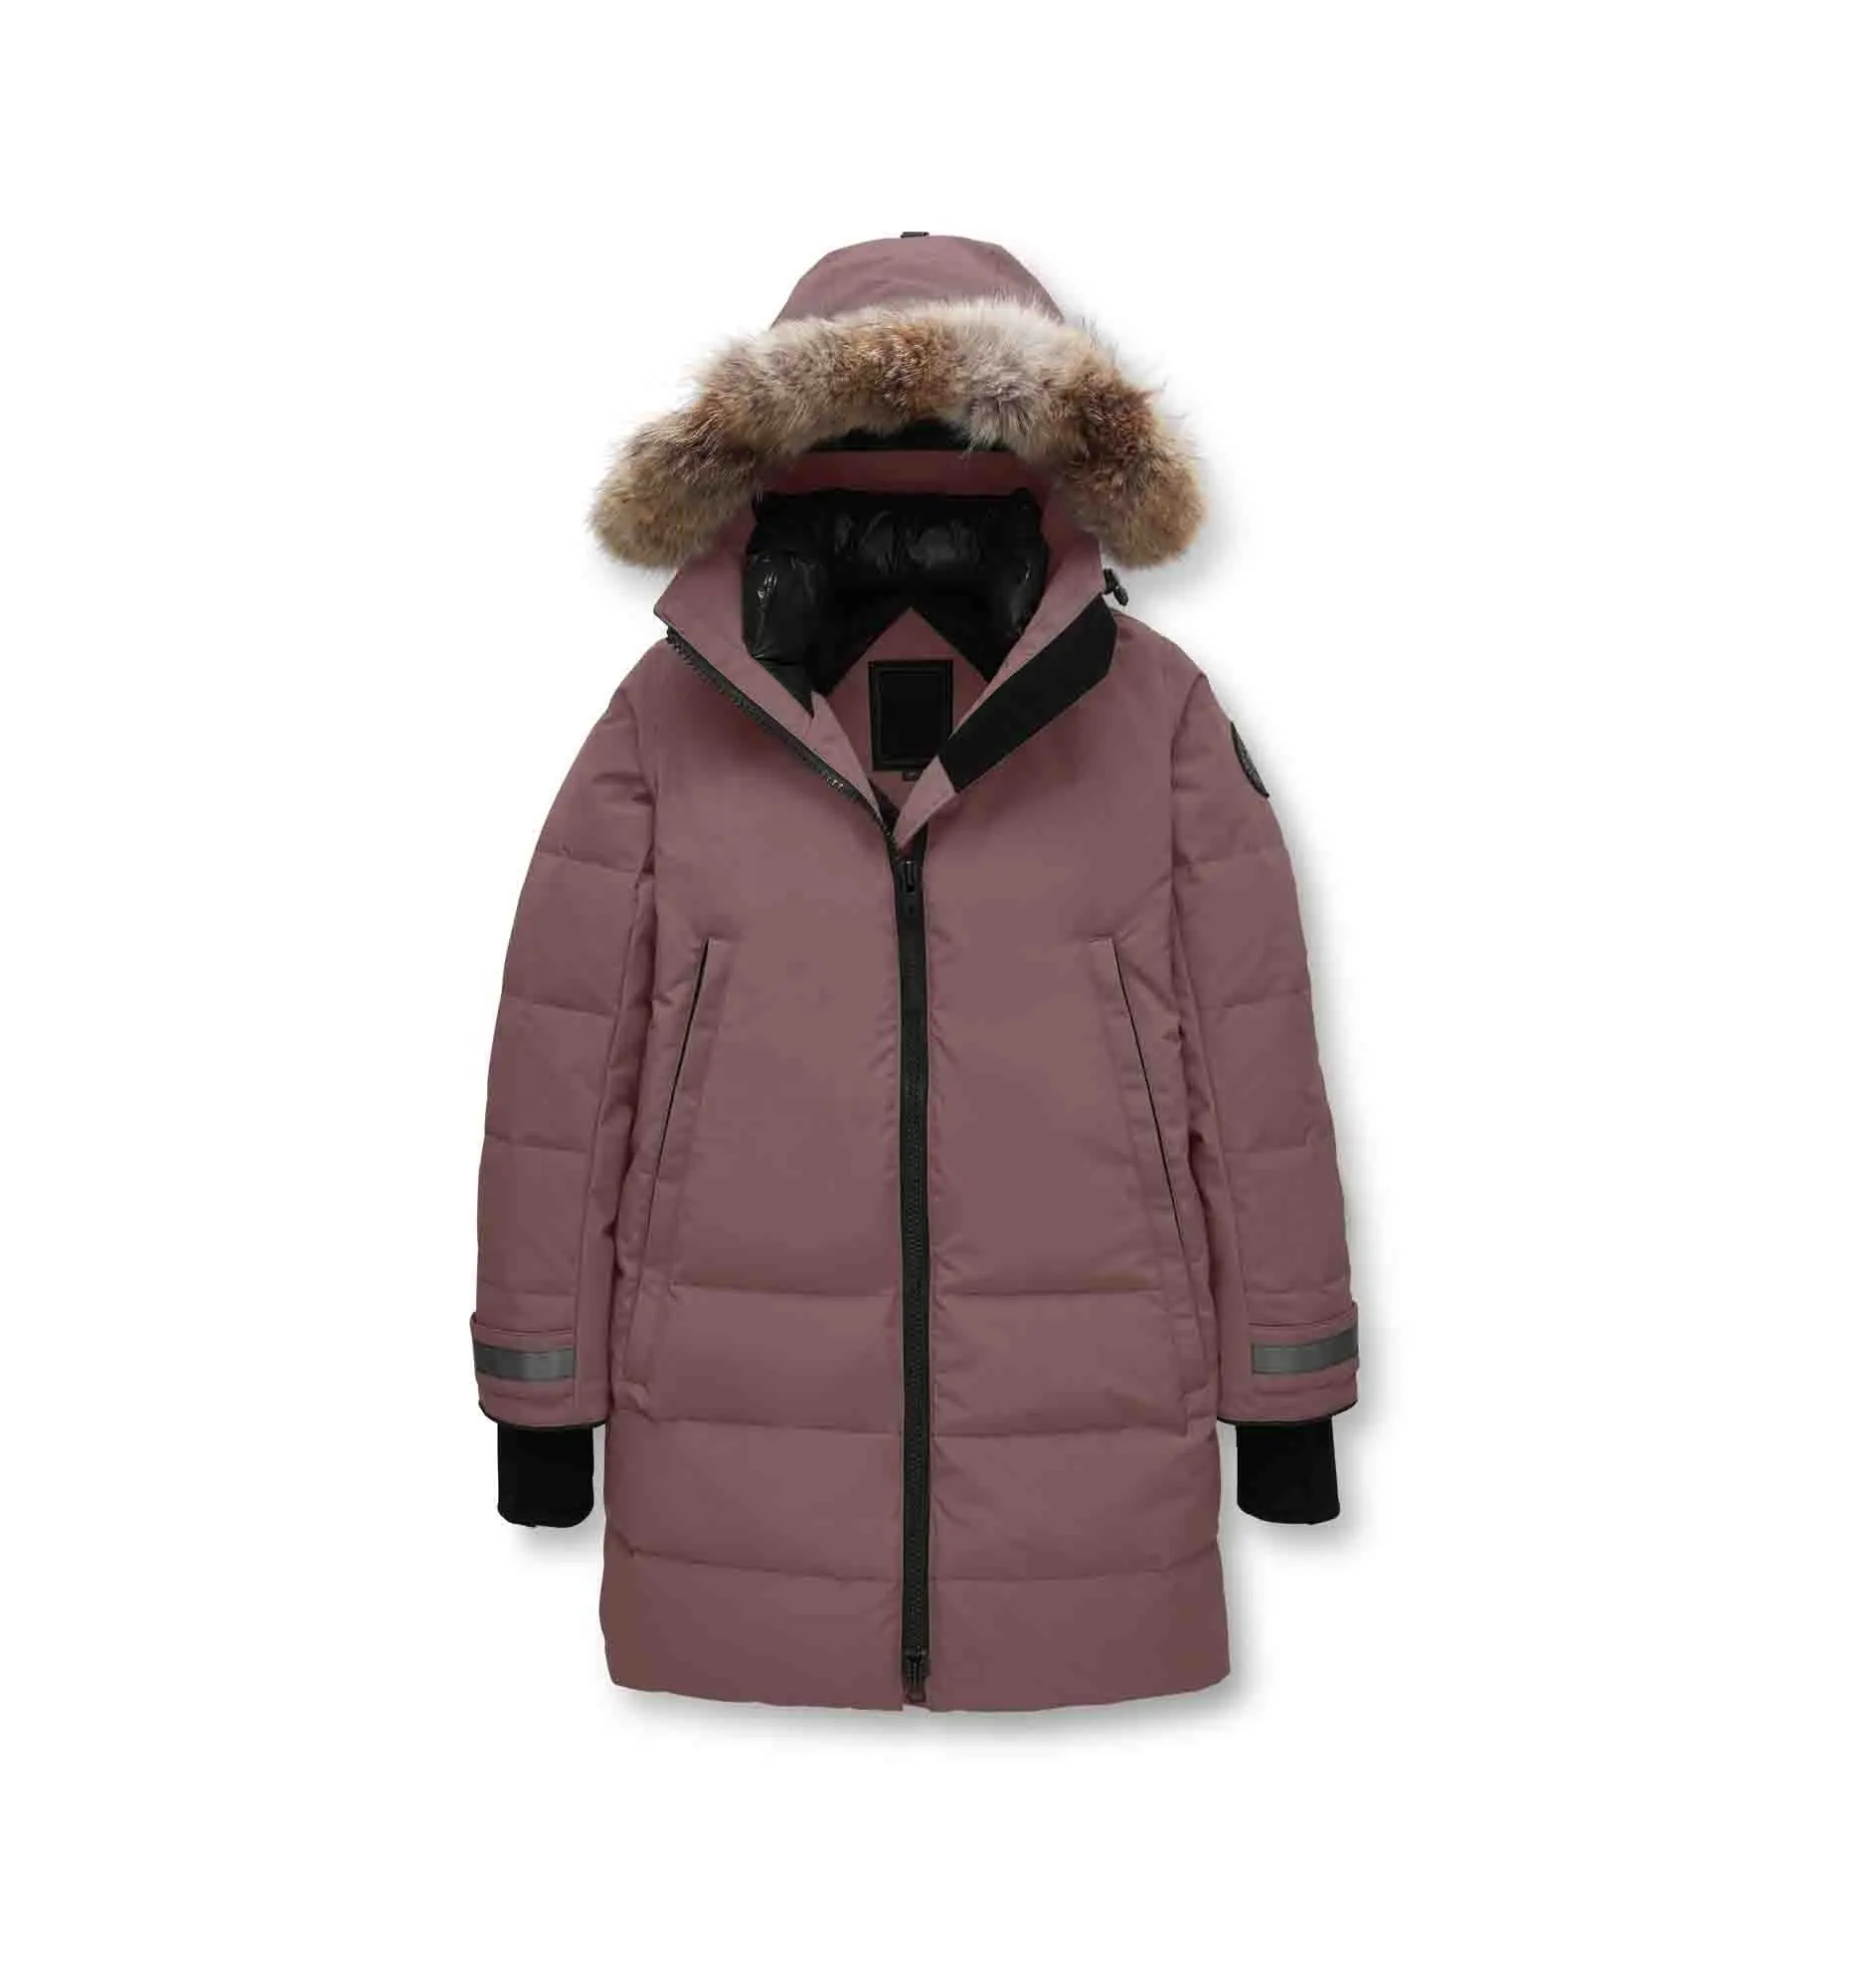 Winter Women Jacket Long Poly Filling Jacket Padded Coat Ladies Slim Hooded Parka Jacket Comfortable